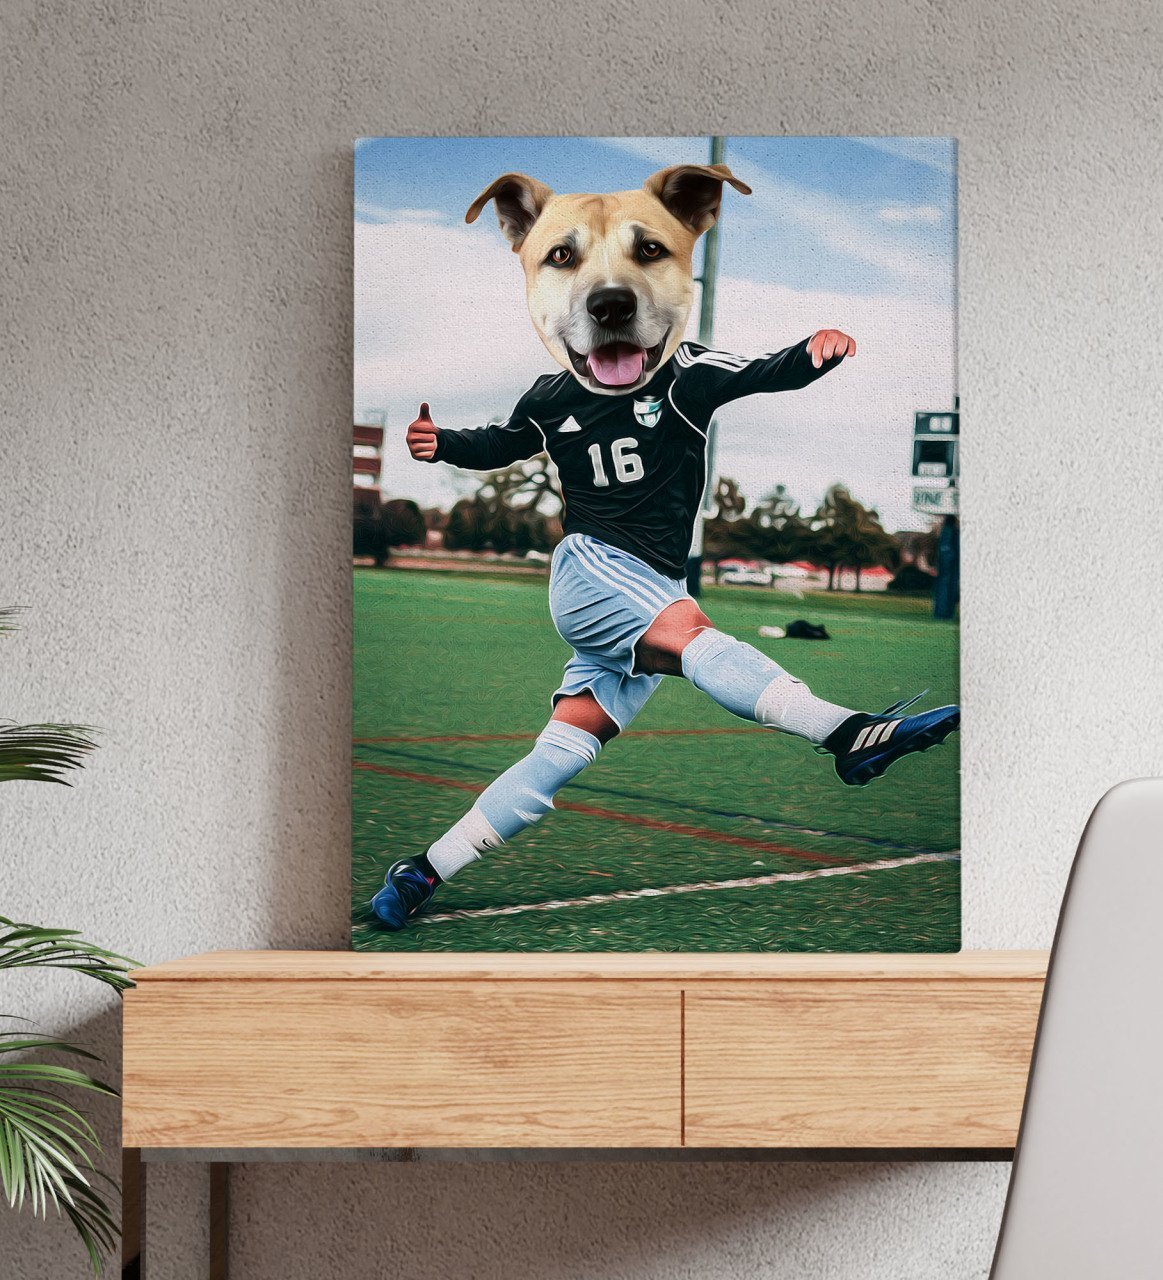 Evcil Dostlara Özel Futbolcu Tasarımlı Portre Kanvas Tablo 50x70cm-2